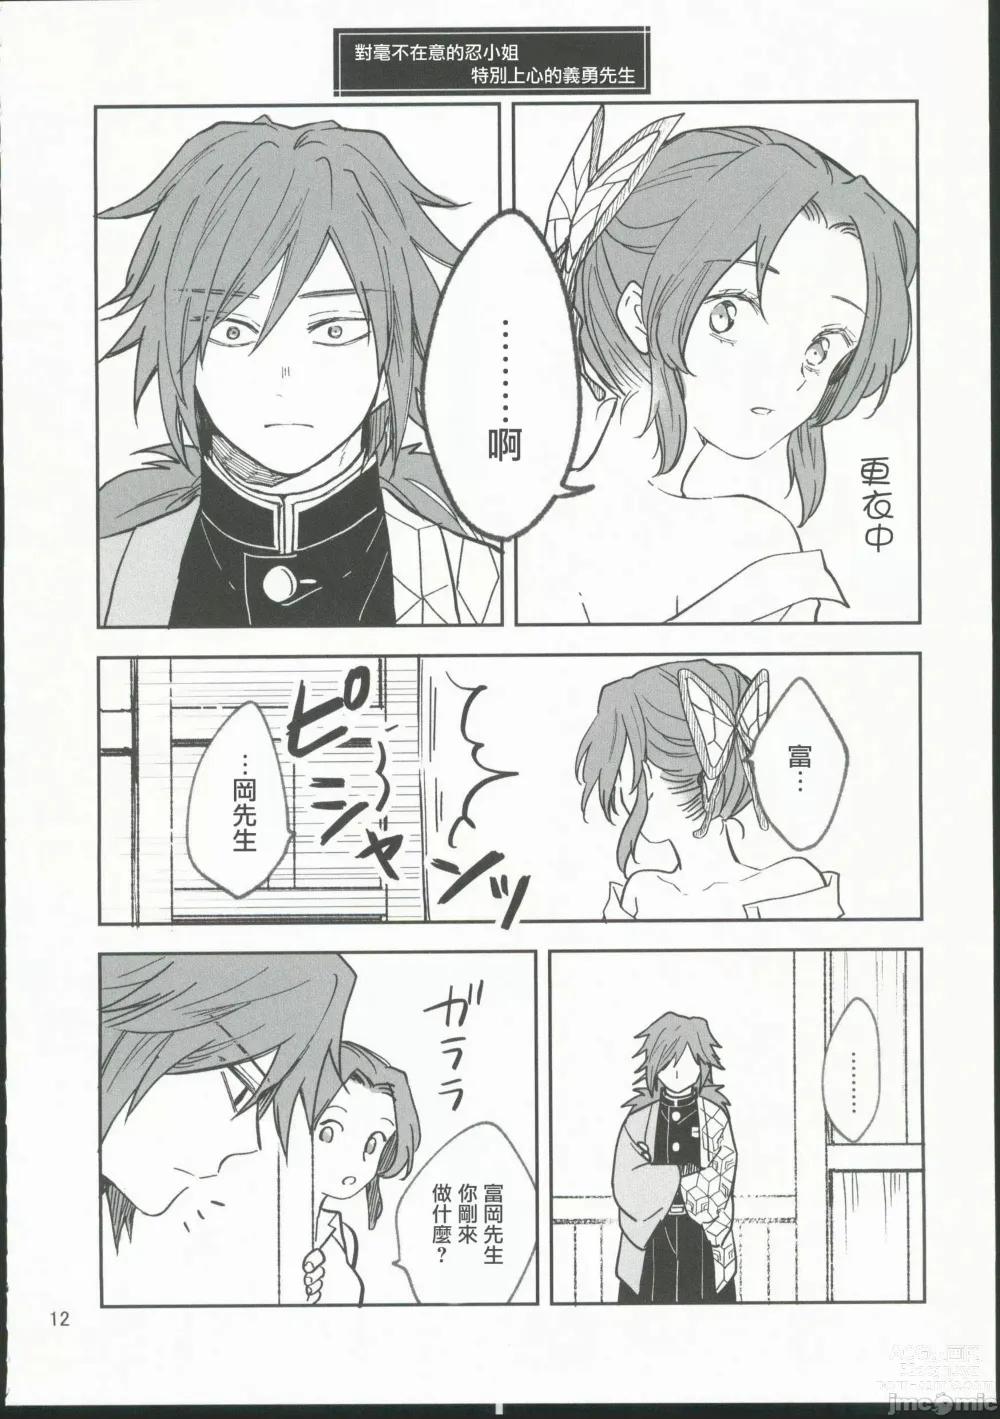 Page 11 of doujinshi Koi Tsumugi